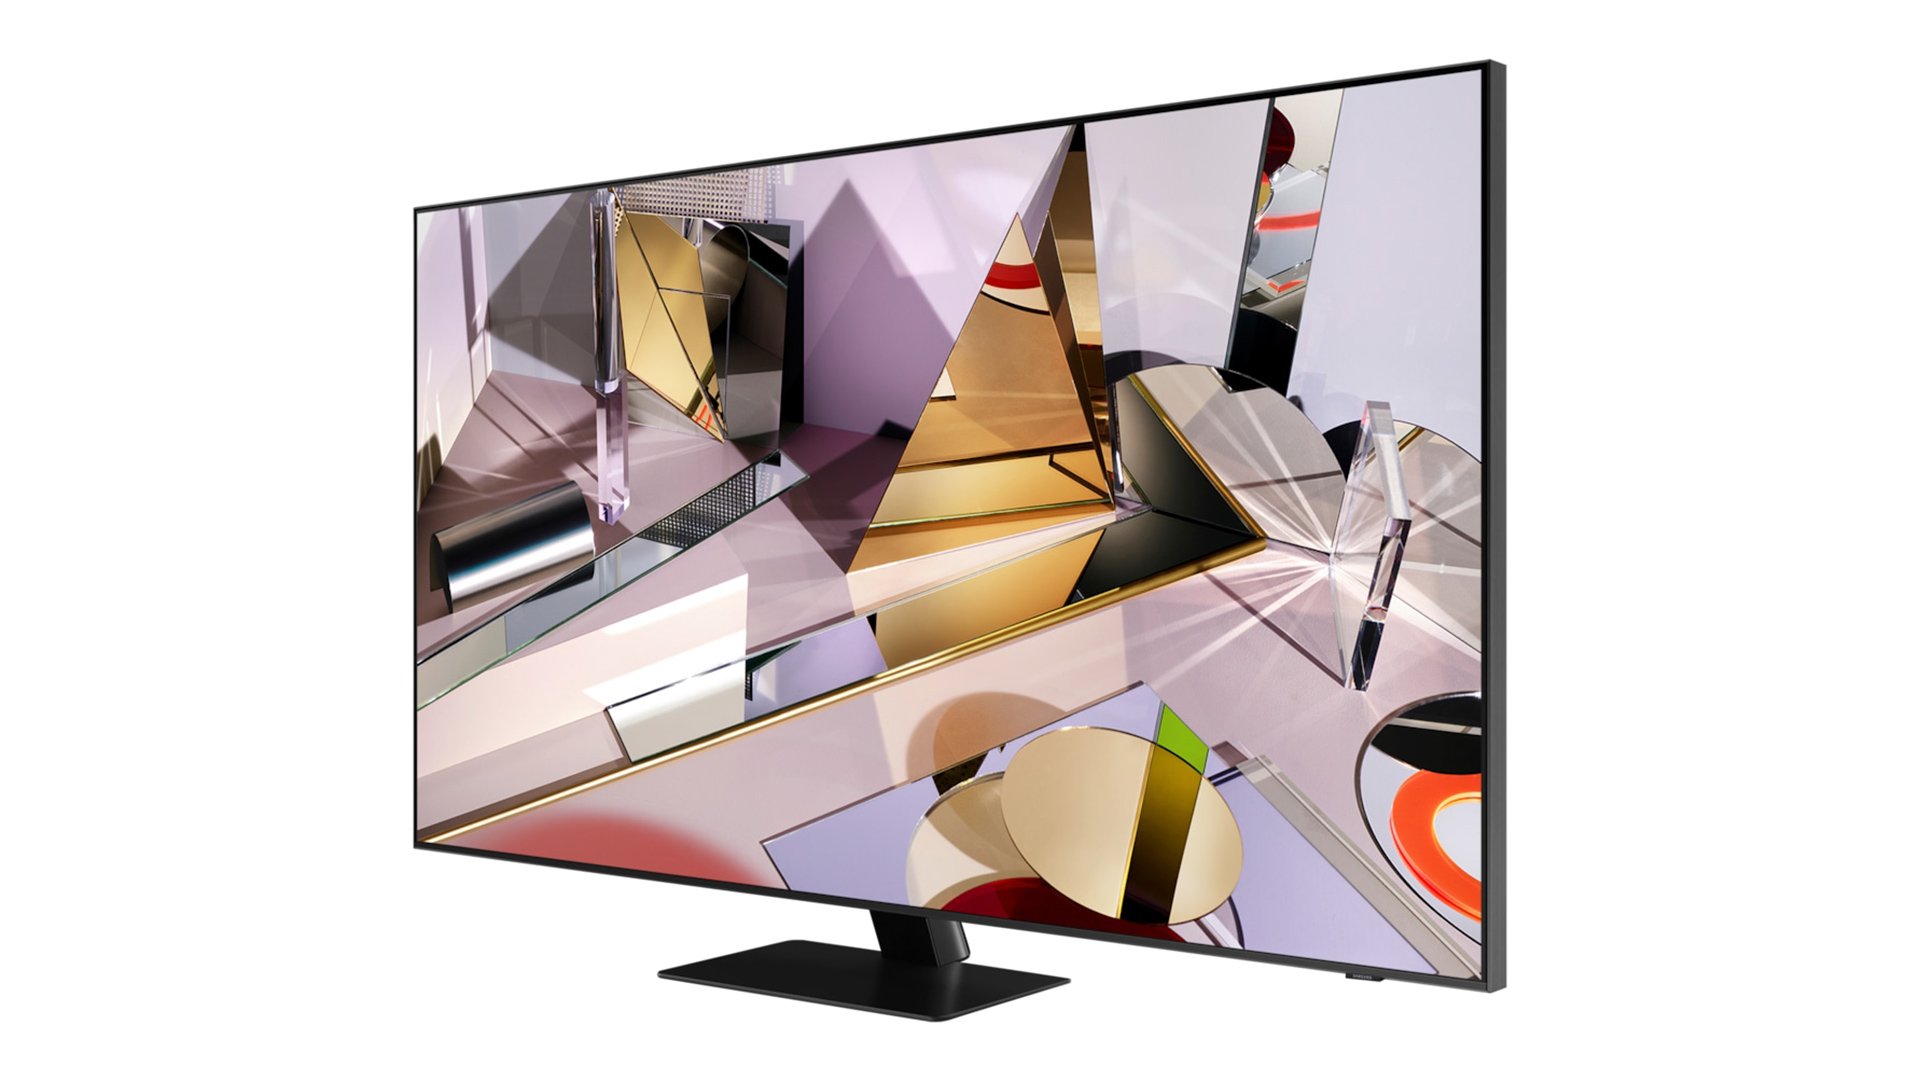 Samsung Q700T 8K television. Image: Samsung.